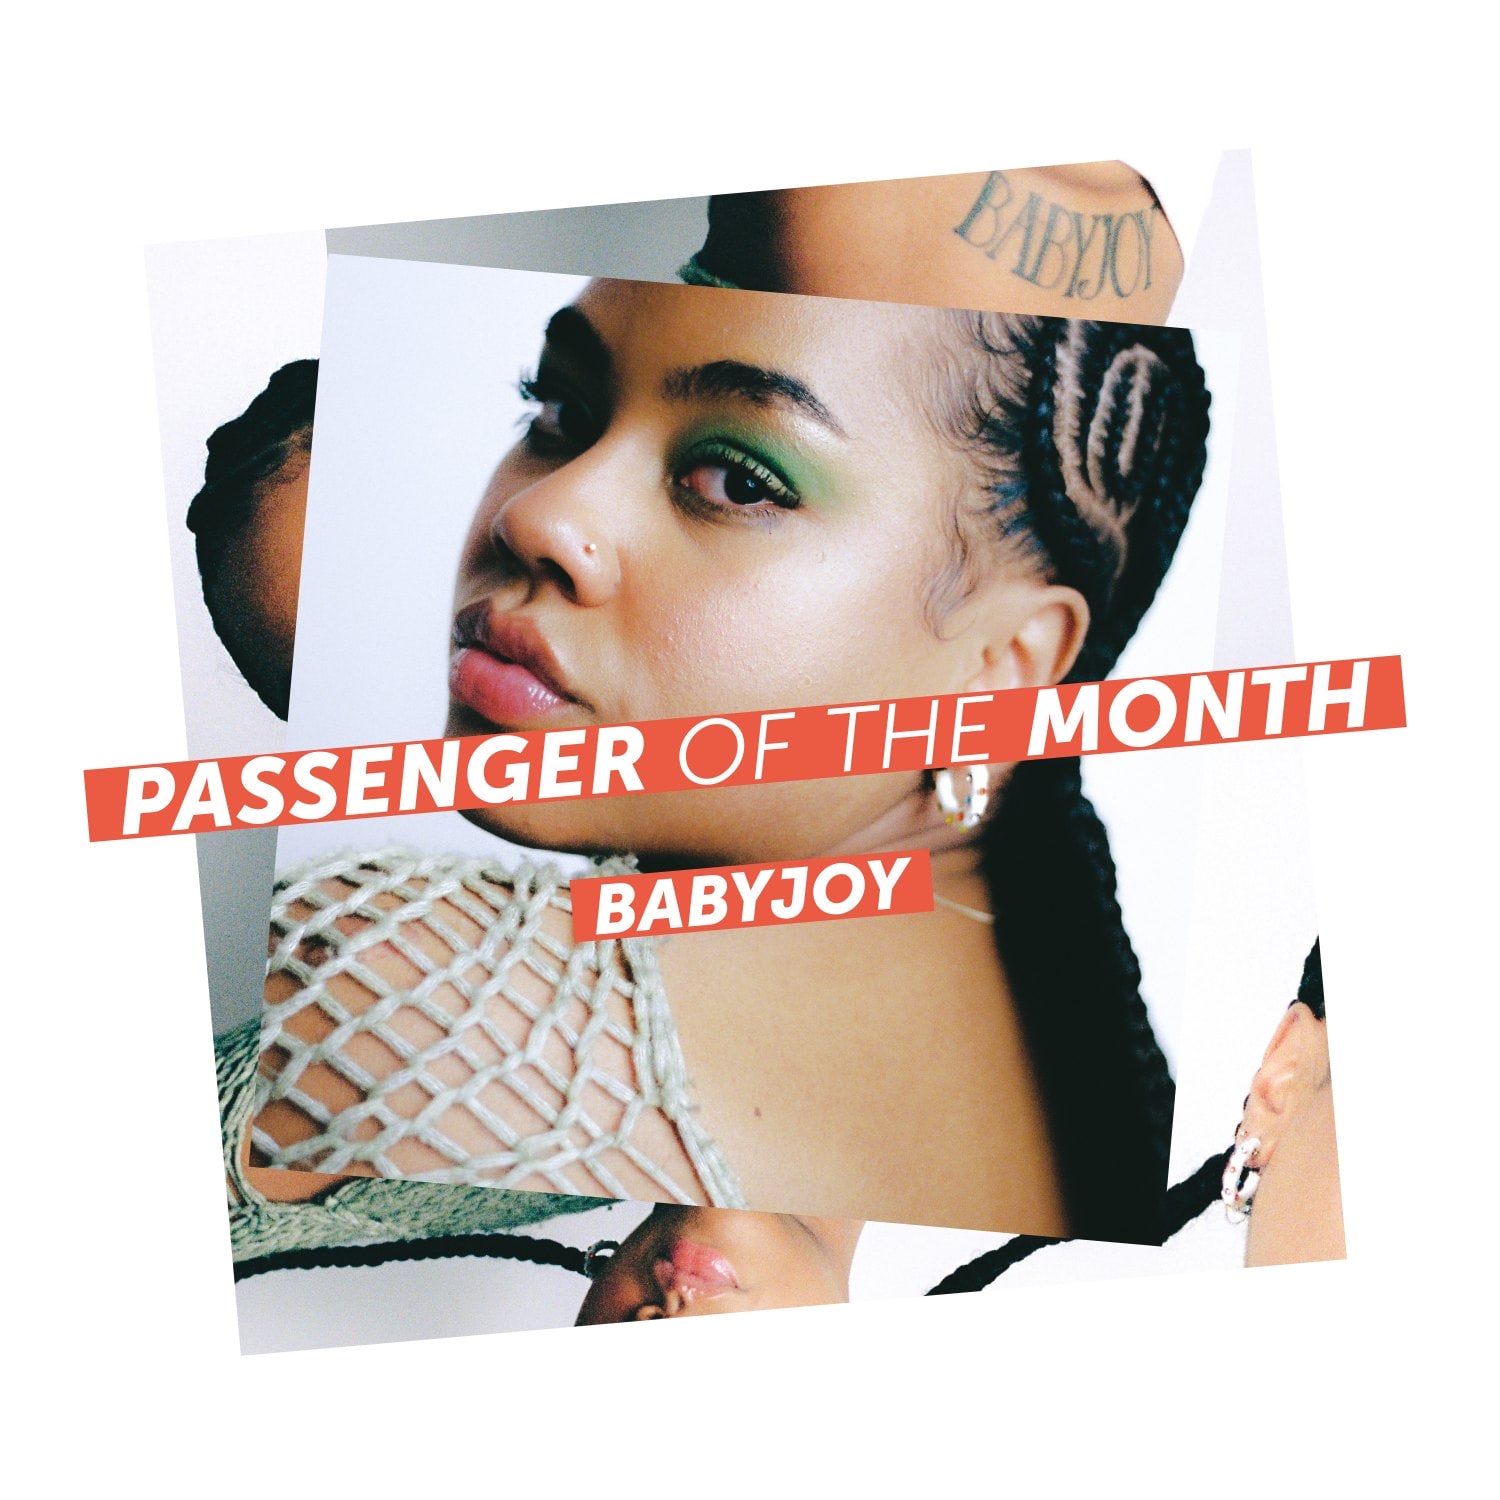 Babyjoy als Passenger of the month